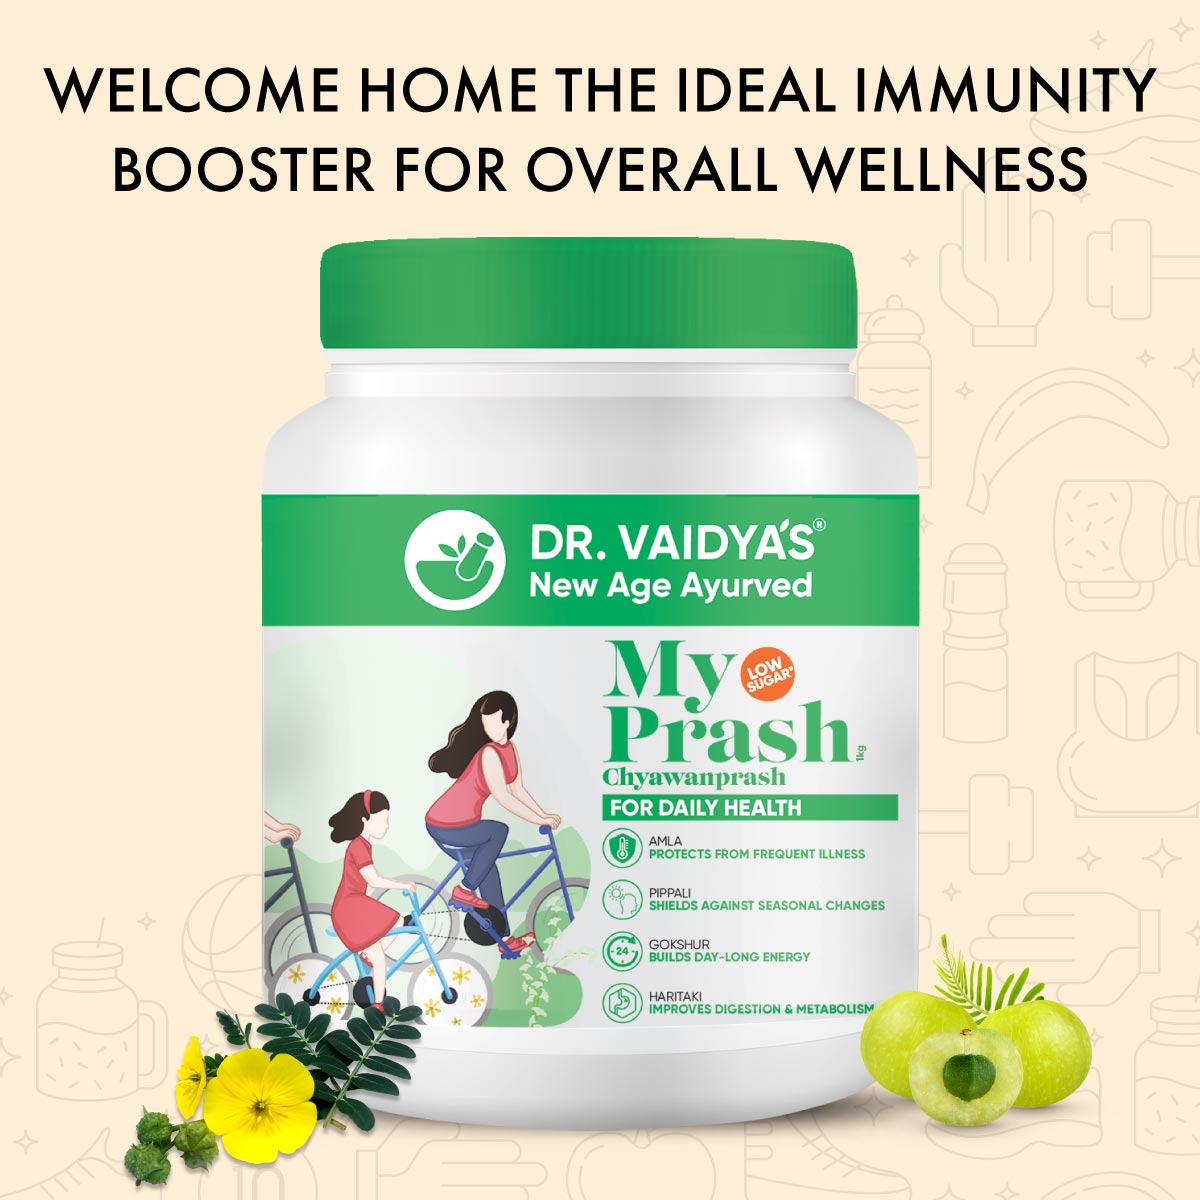 MyPrash for Daily Health: New Age Chyawanprash For Family’s Health